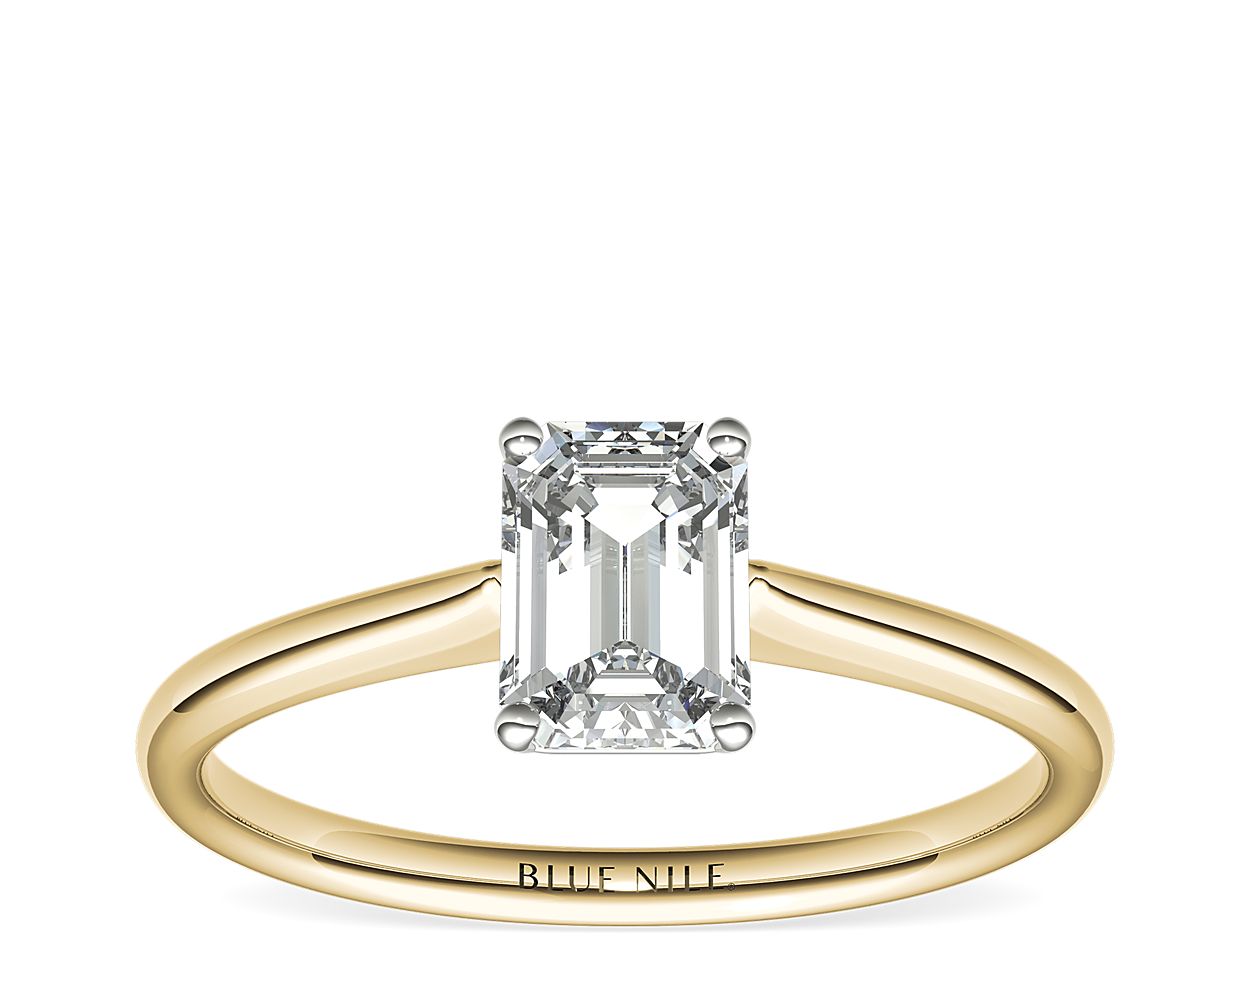 Petite Solitaire Engagement Ring in 18k Yellow Gold 1.01 Carat G-VVS2 Emerald Cut Diamond